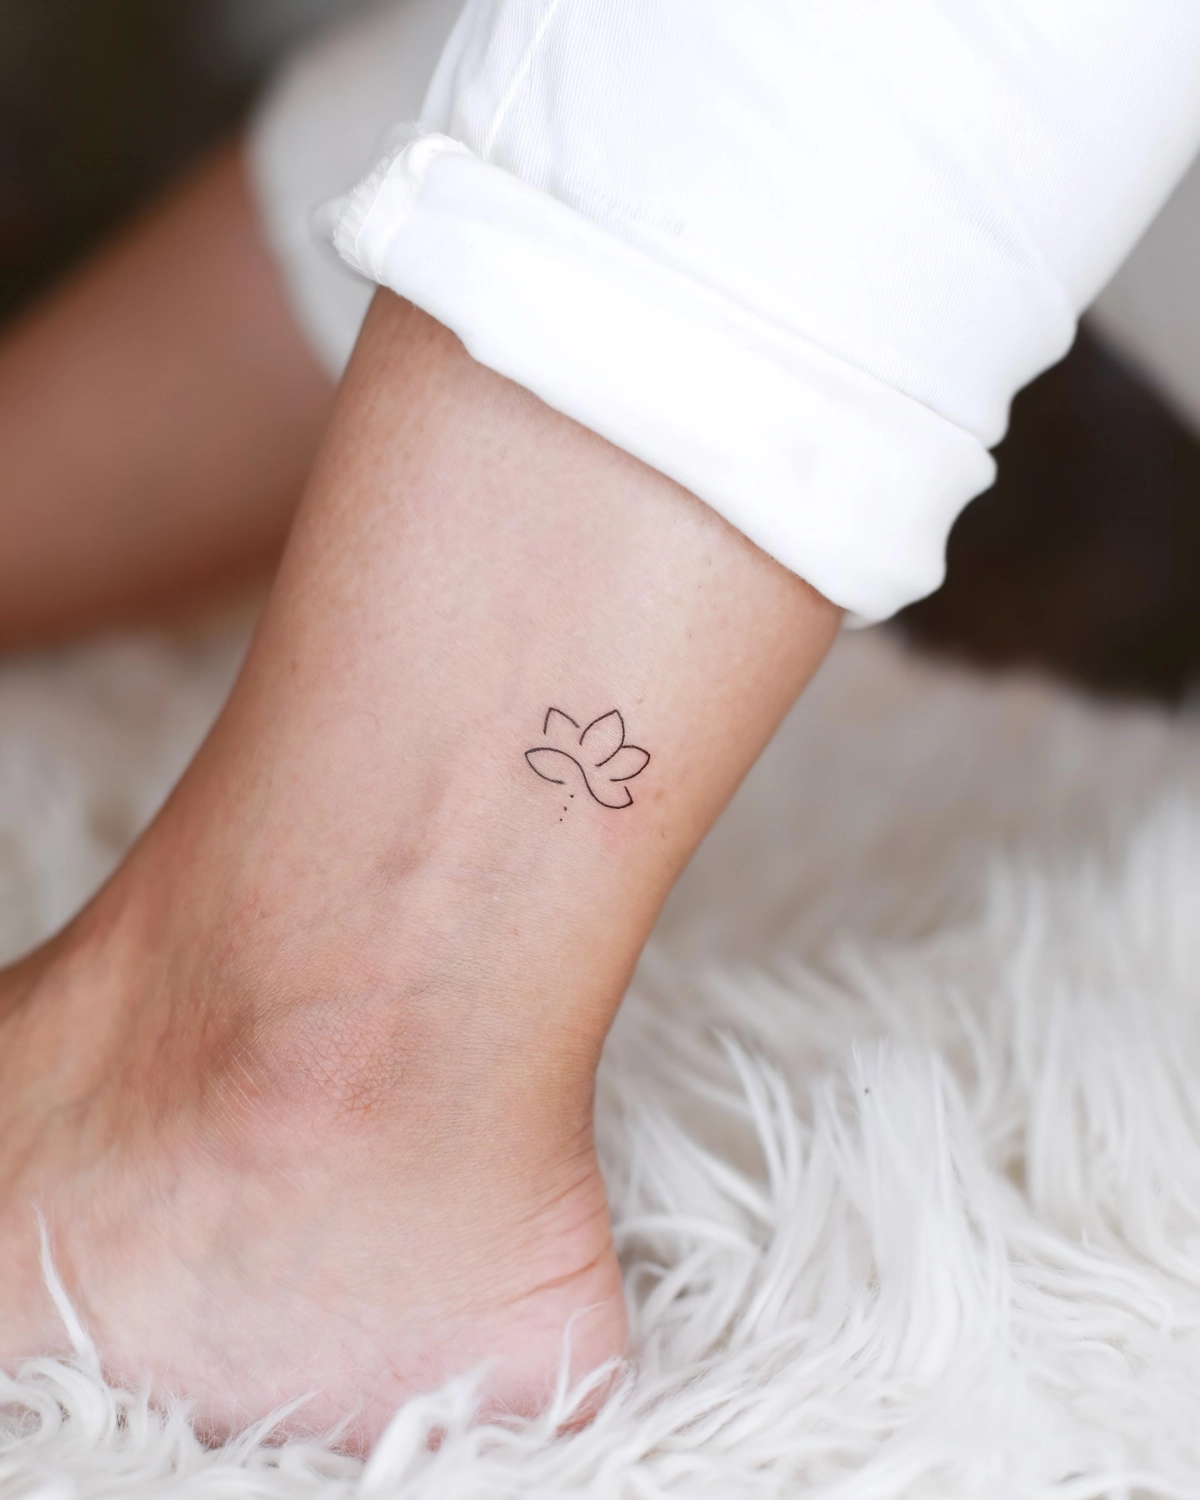 cheville pied femme pantalon blanc tatouage lotus discret fleur